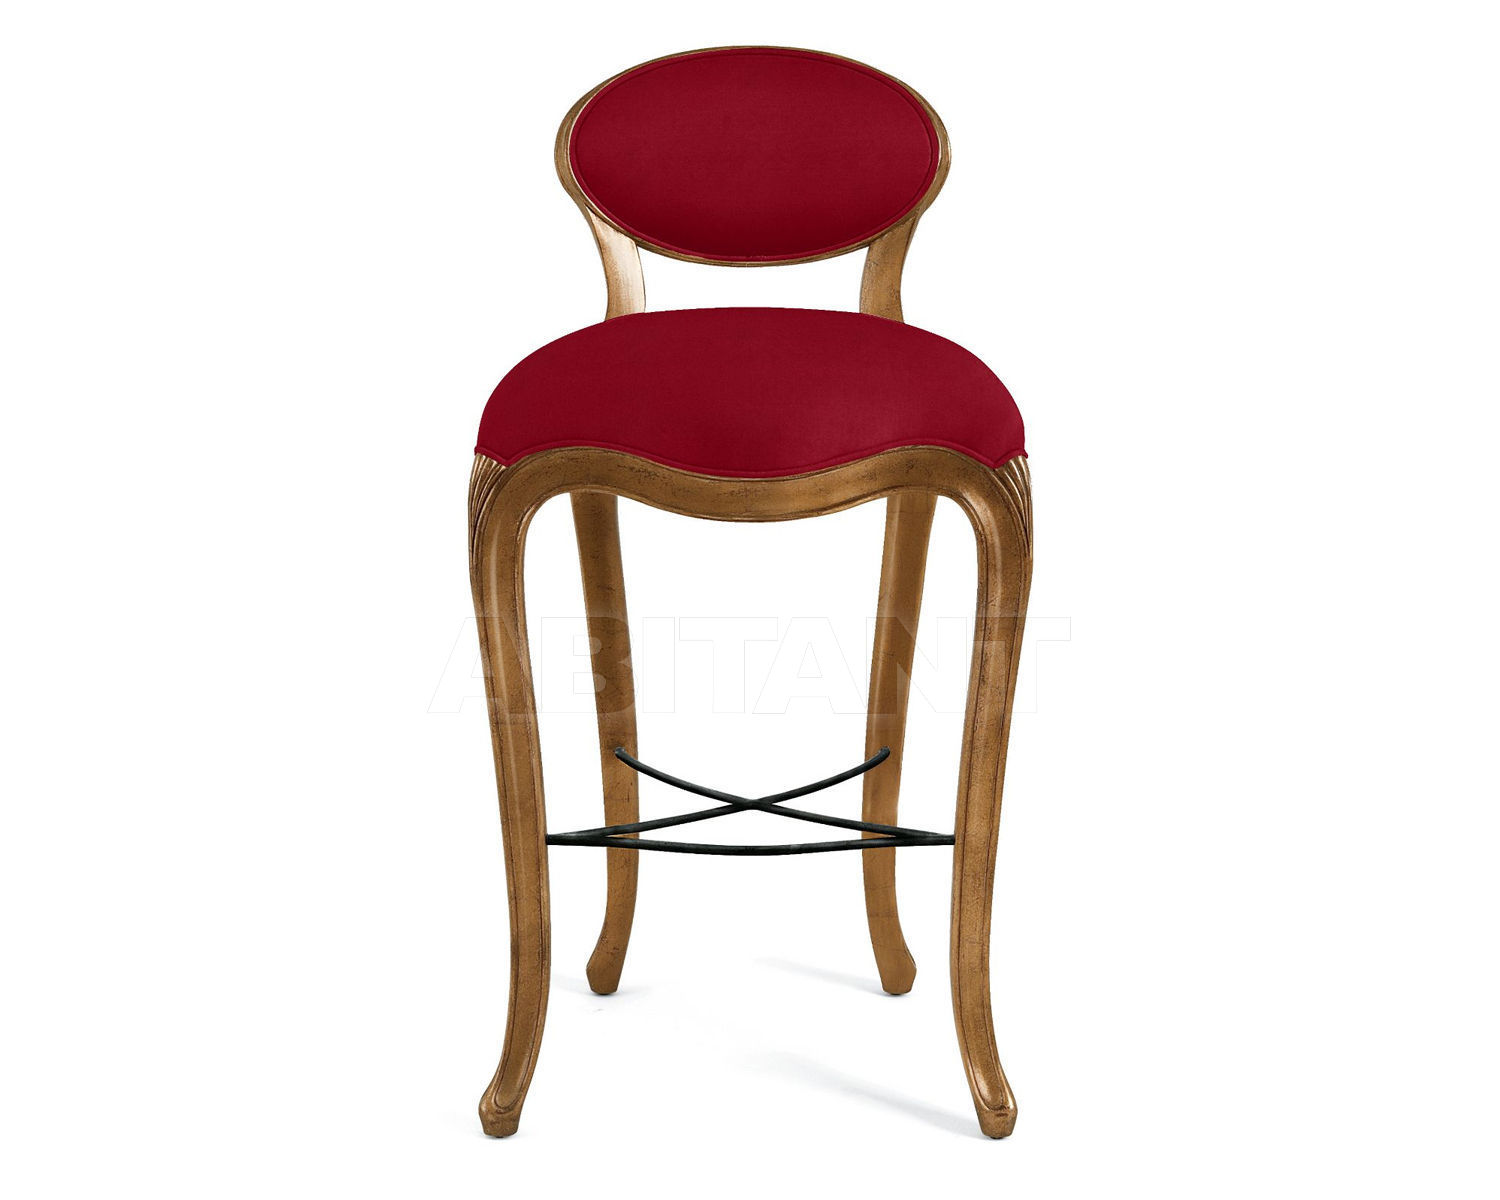 Buy Bar stool Cafe de Paris Christopher Guy 2014 60-0024-CC Garnet